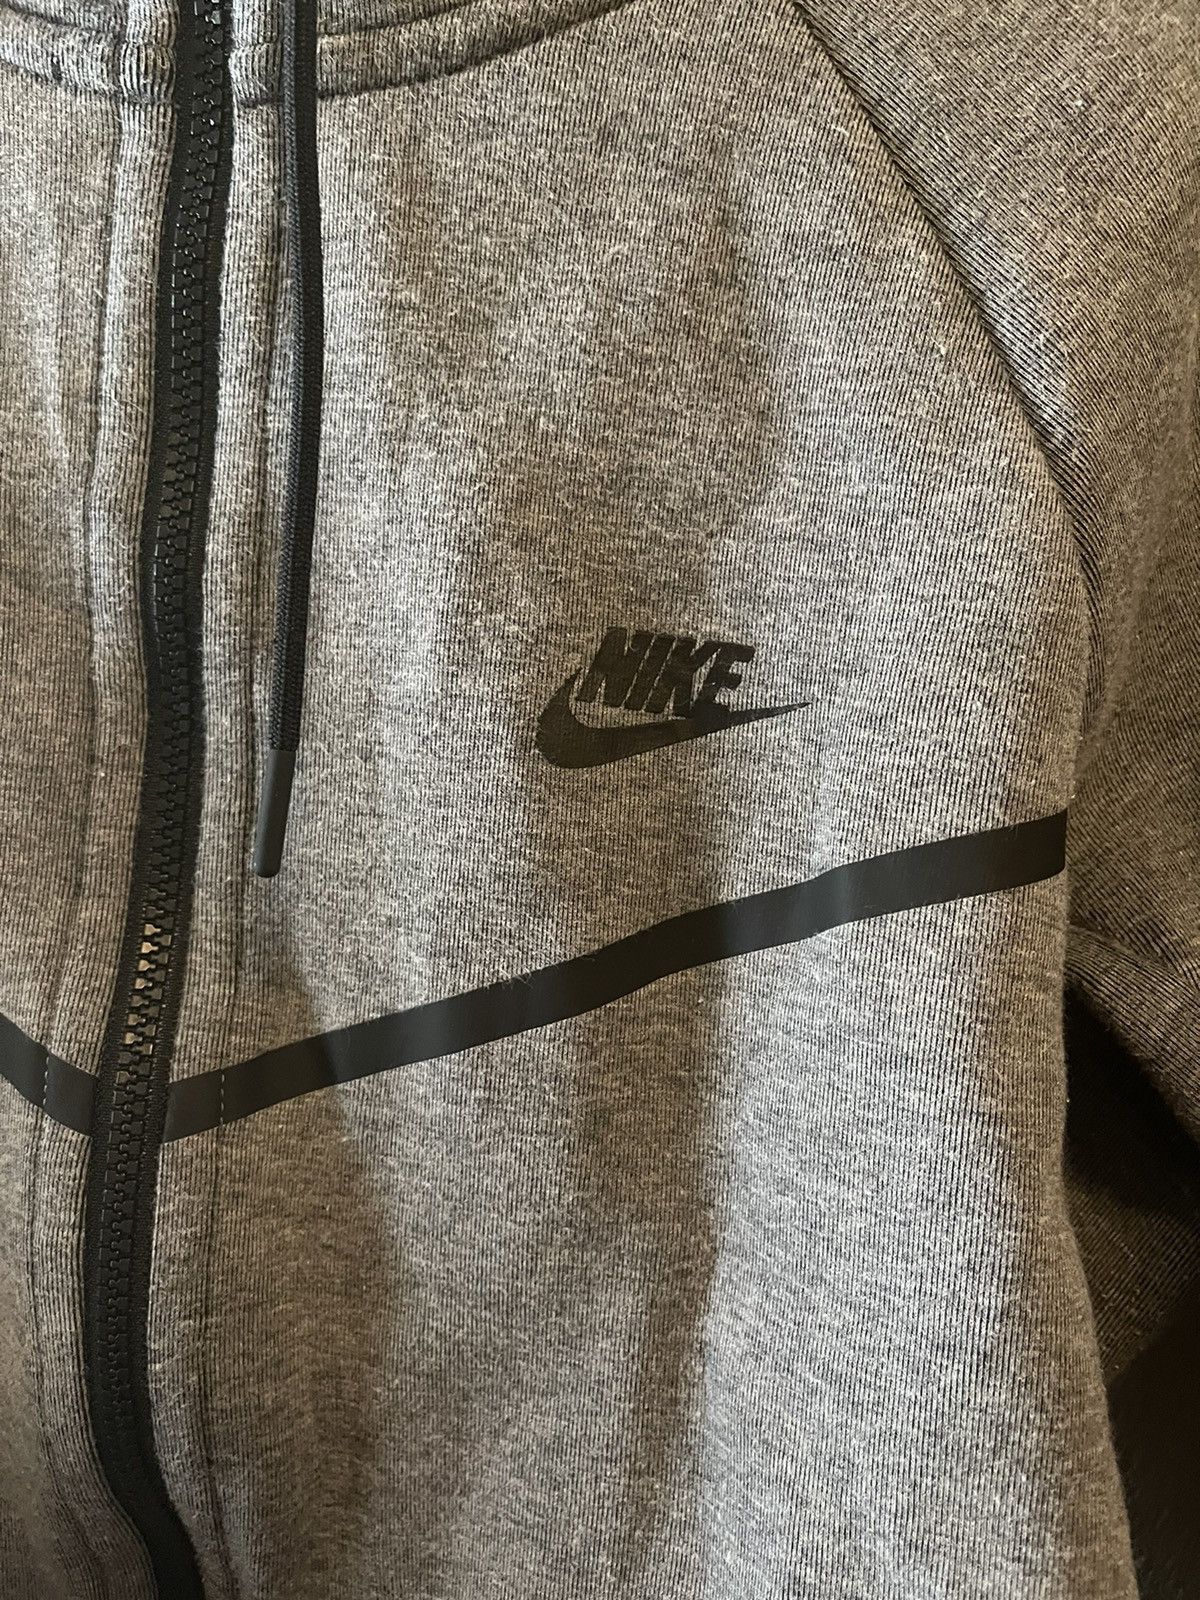 Nike Nike Tech Fleece Hoodie Size US M / EU 48-50 / 2 - 2 Preview